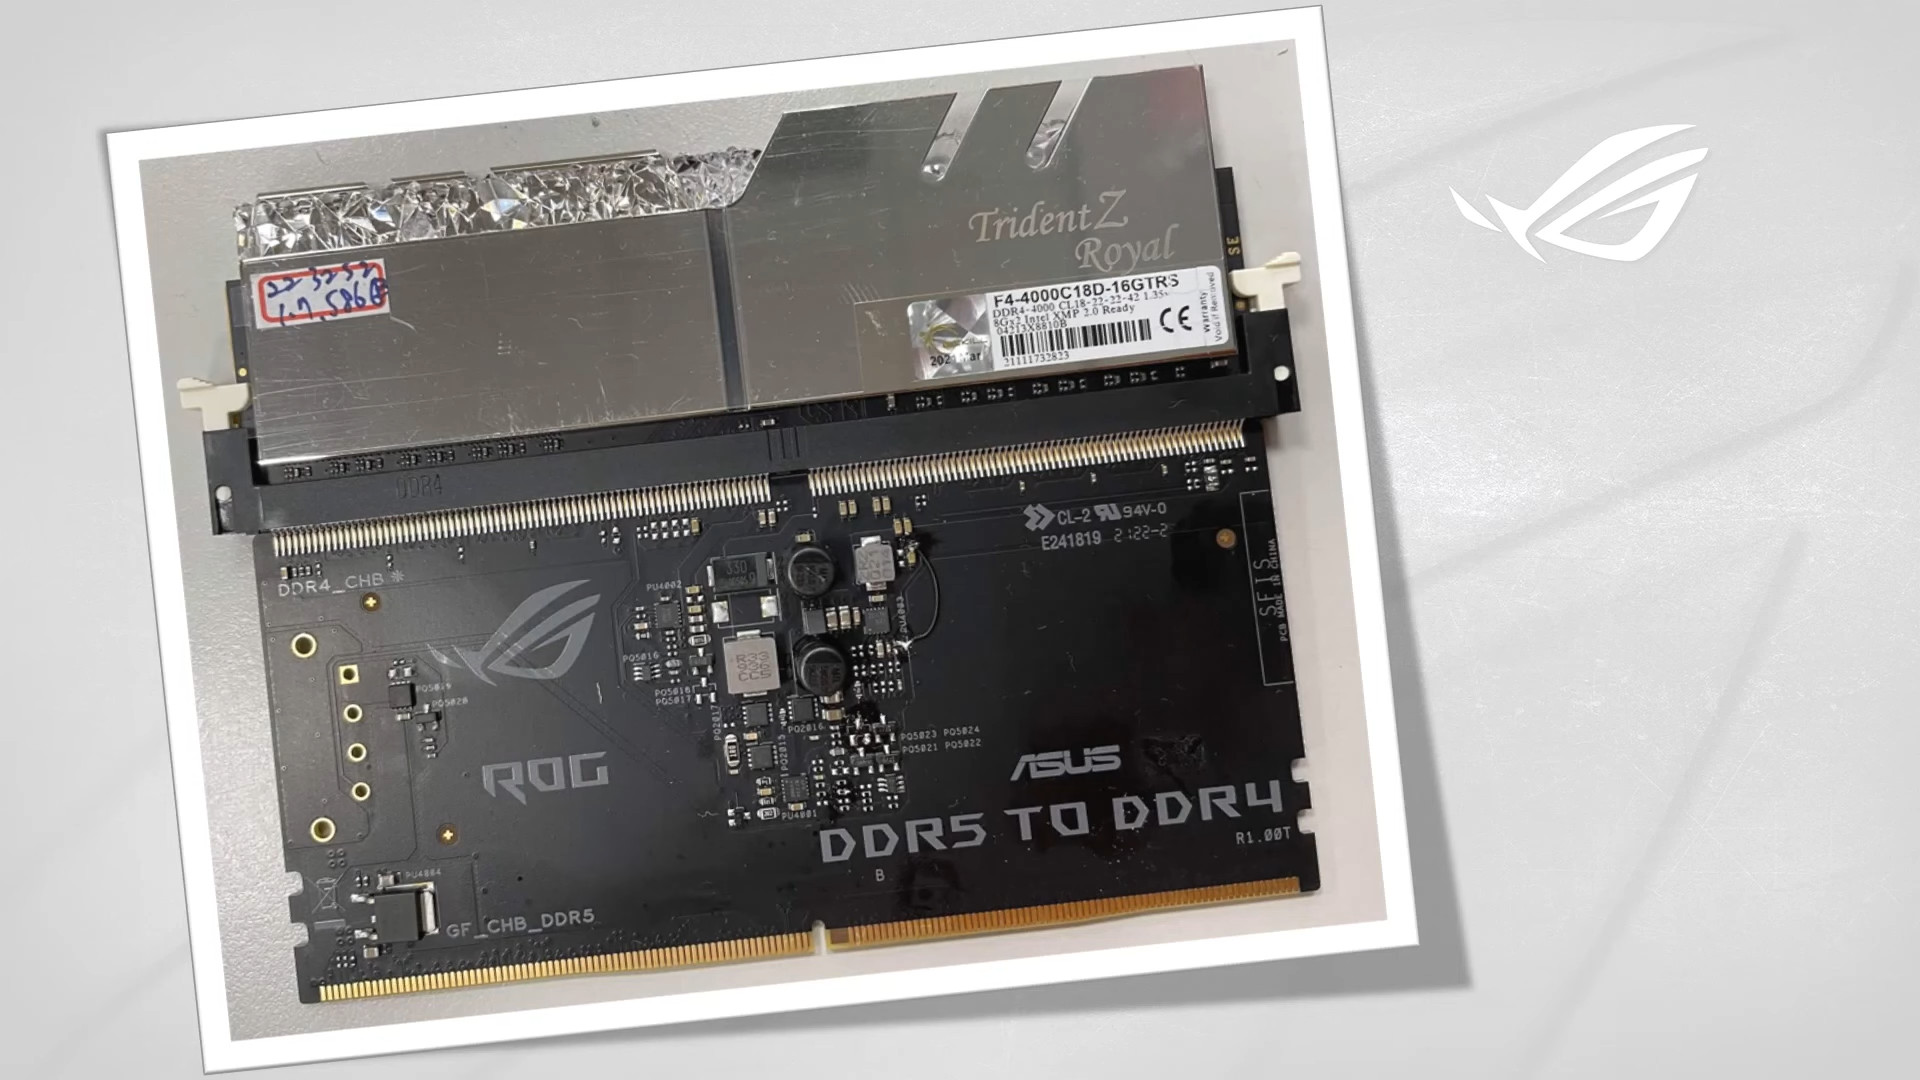 Egy memria- s egy piaci rst is betltene az ASUS j DDR4 adaptere.